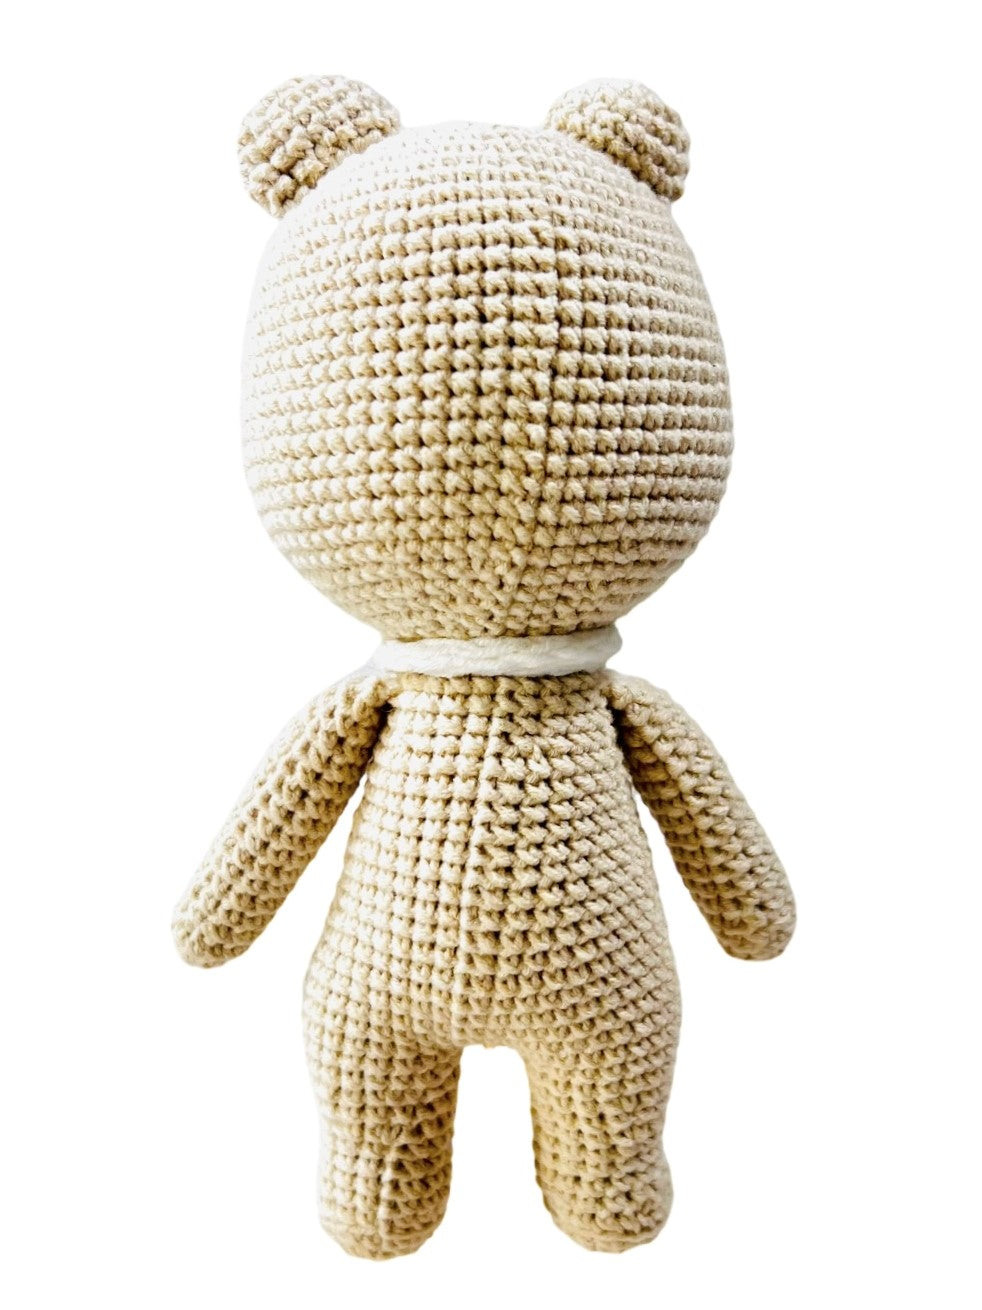 Crocheted Animal Doll - Bowie, the Bear